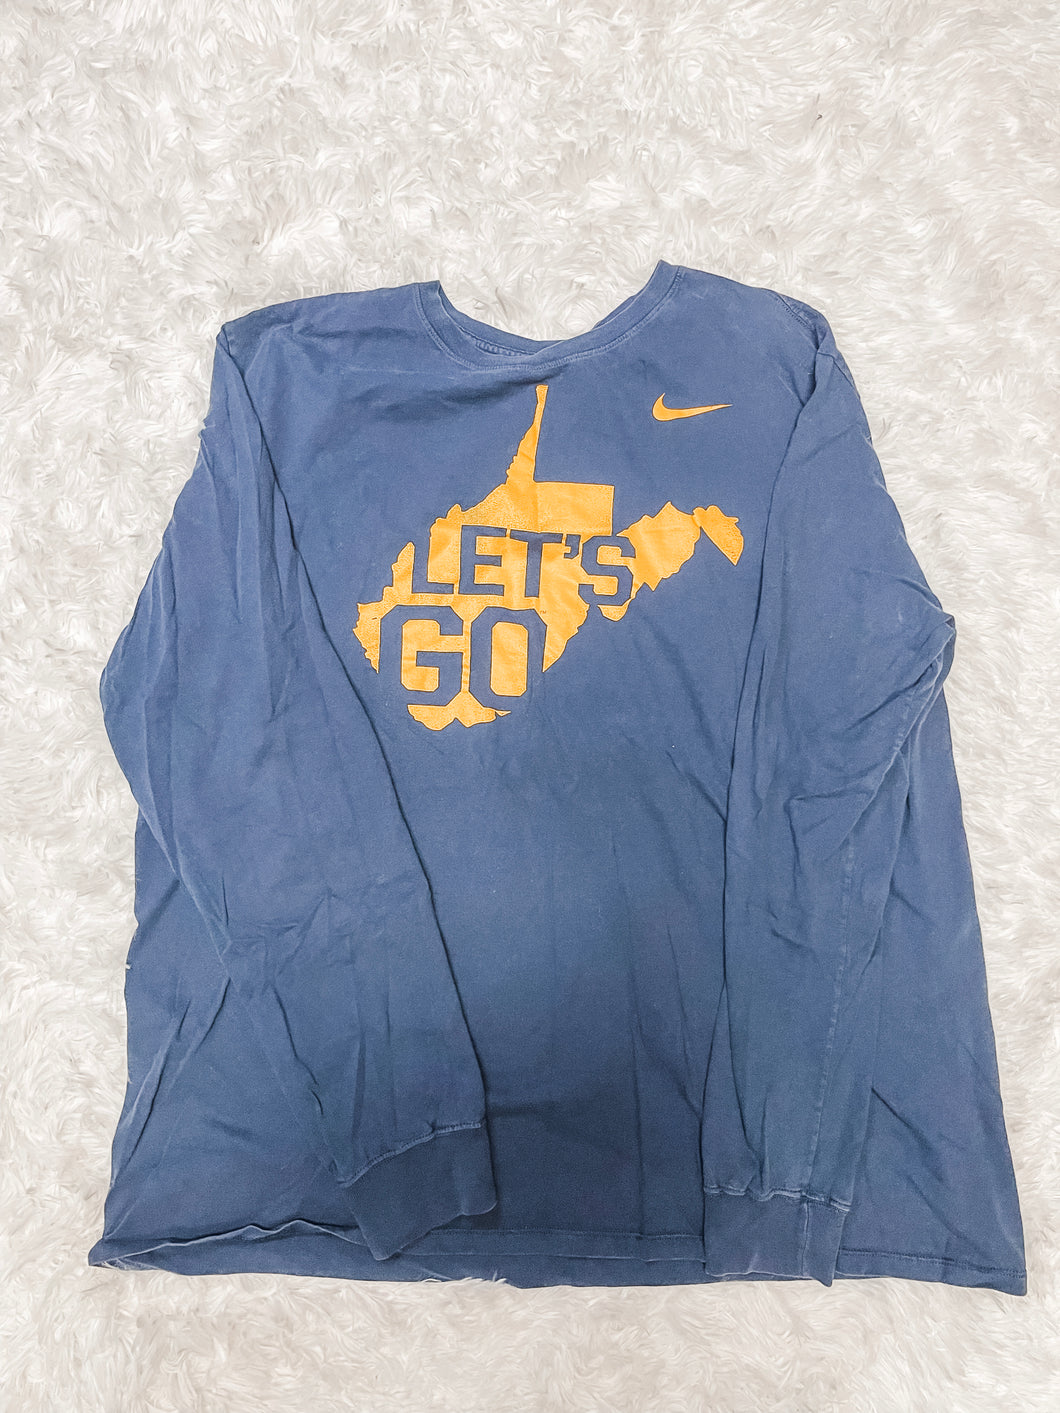 Nike Long Sleeve Top Size Extra Large M0366